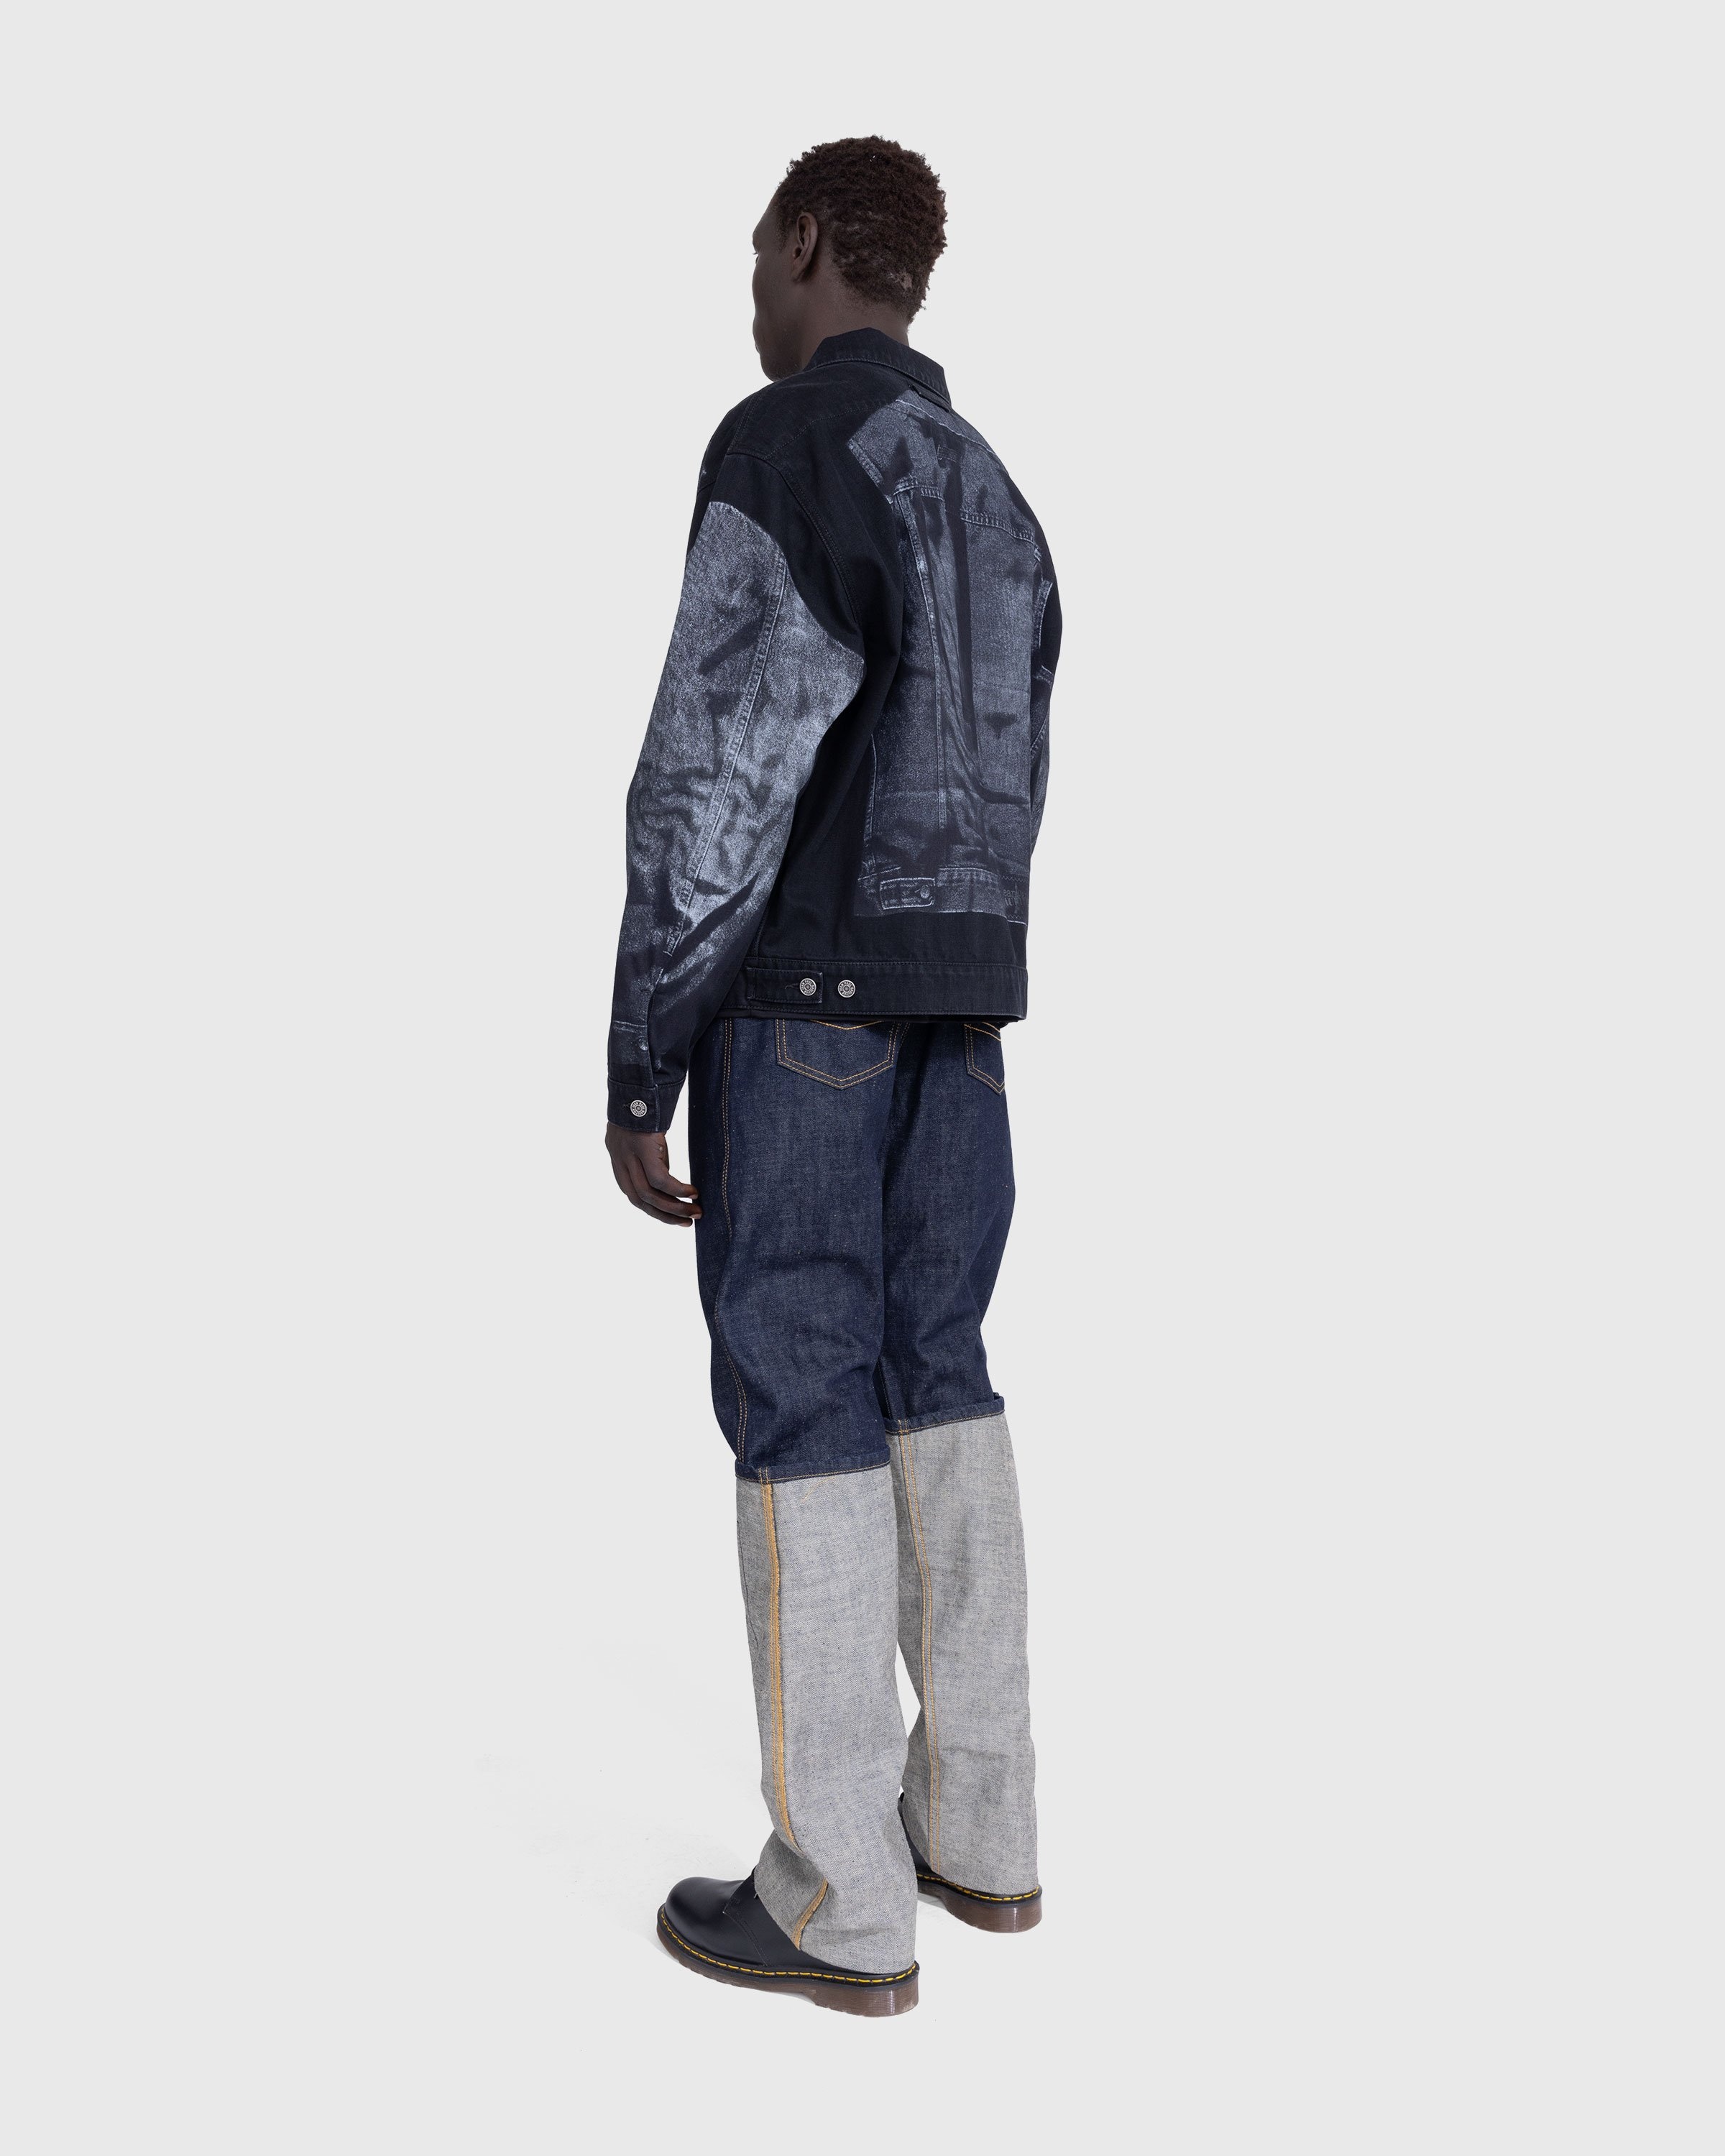 Jean Paul Gaultier – Jean Printed With 325 Indigo - Pants - Blue - Image 3